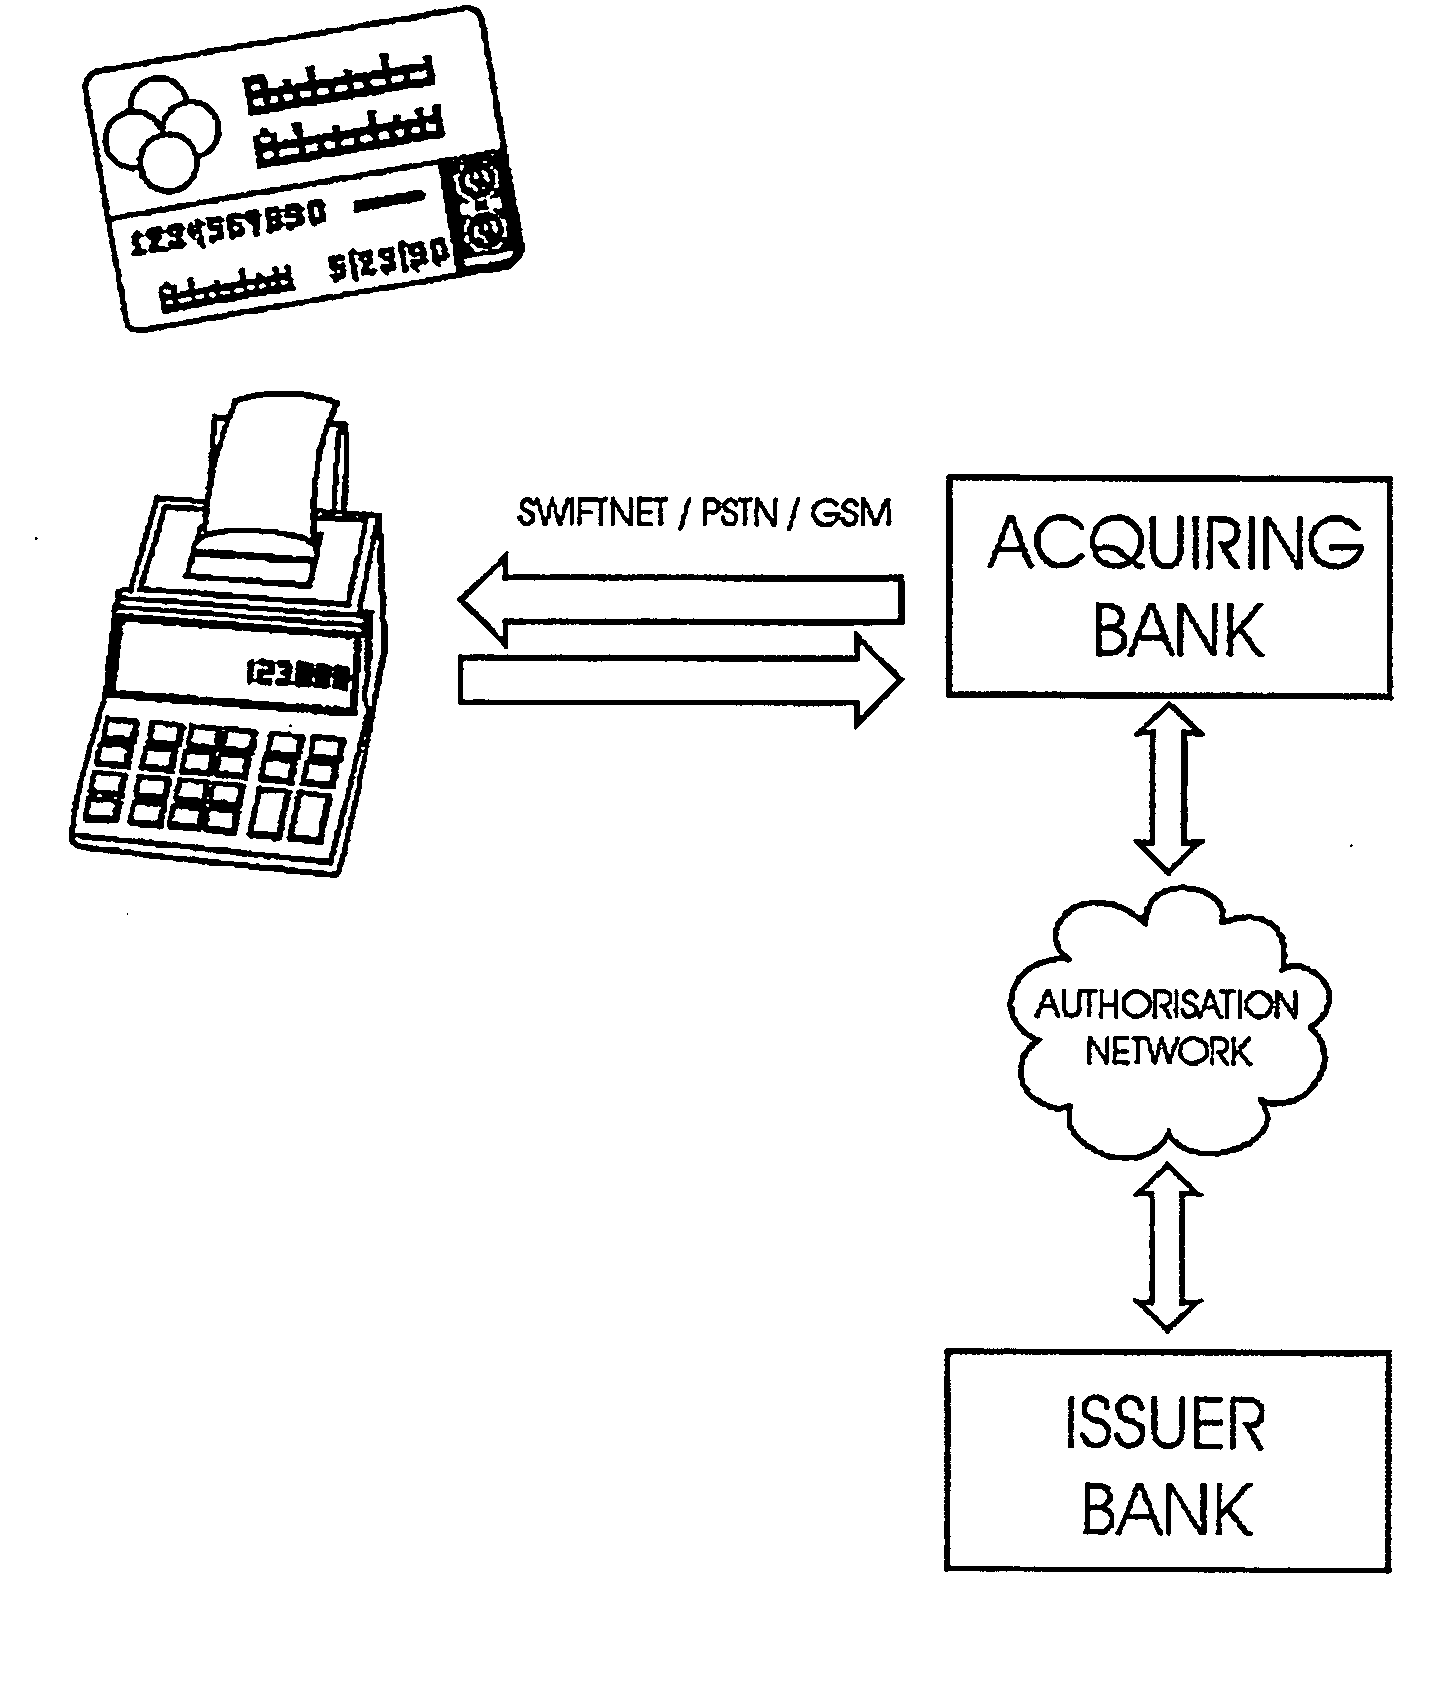 Transaction verification system